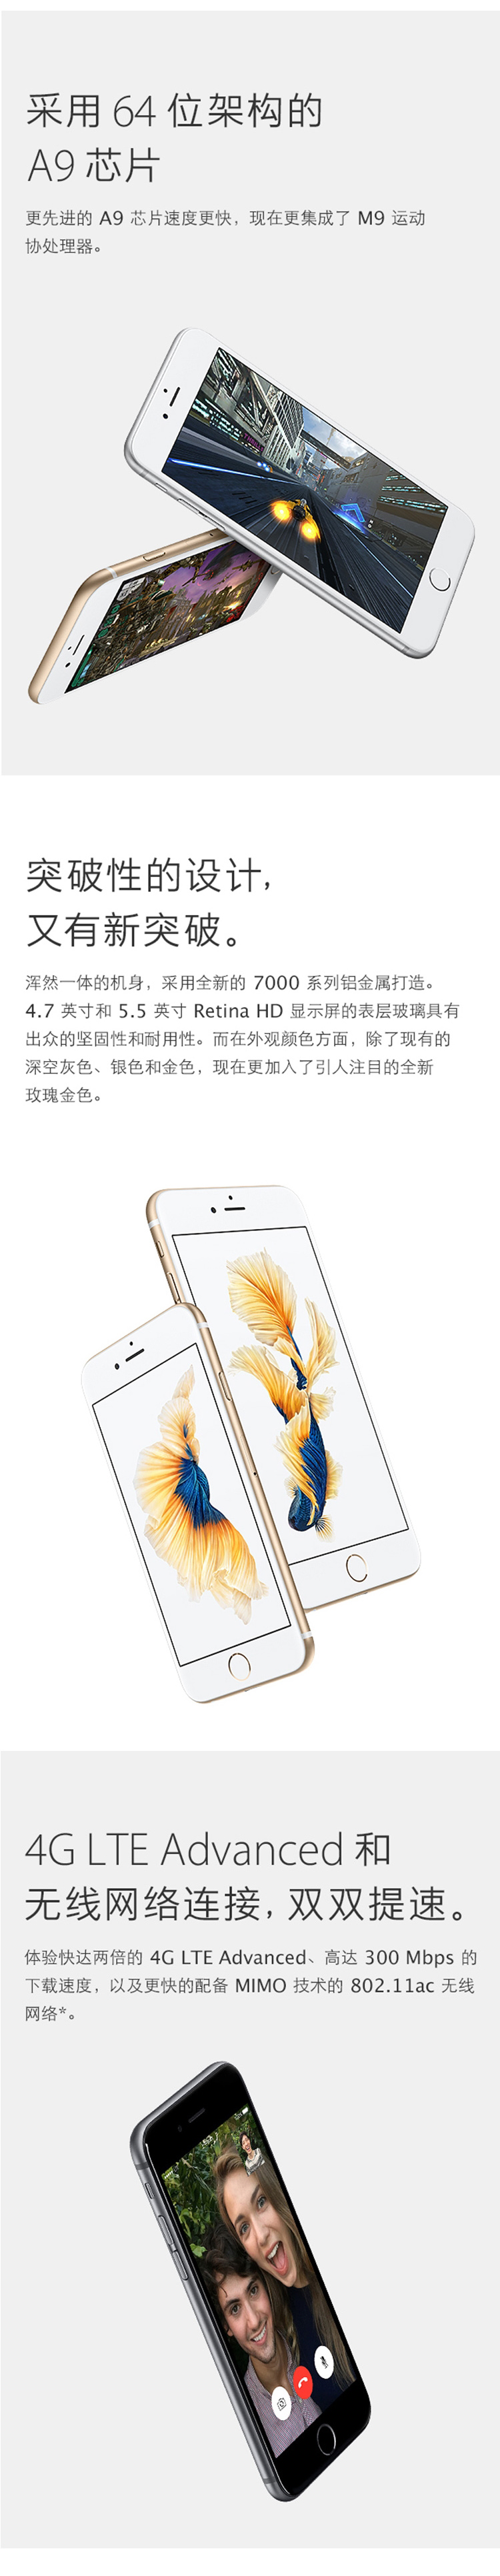 Apple 苹果 iPhone 6s plus 4G手机 全网通16G银色